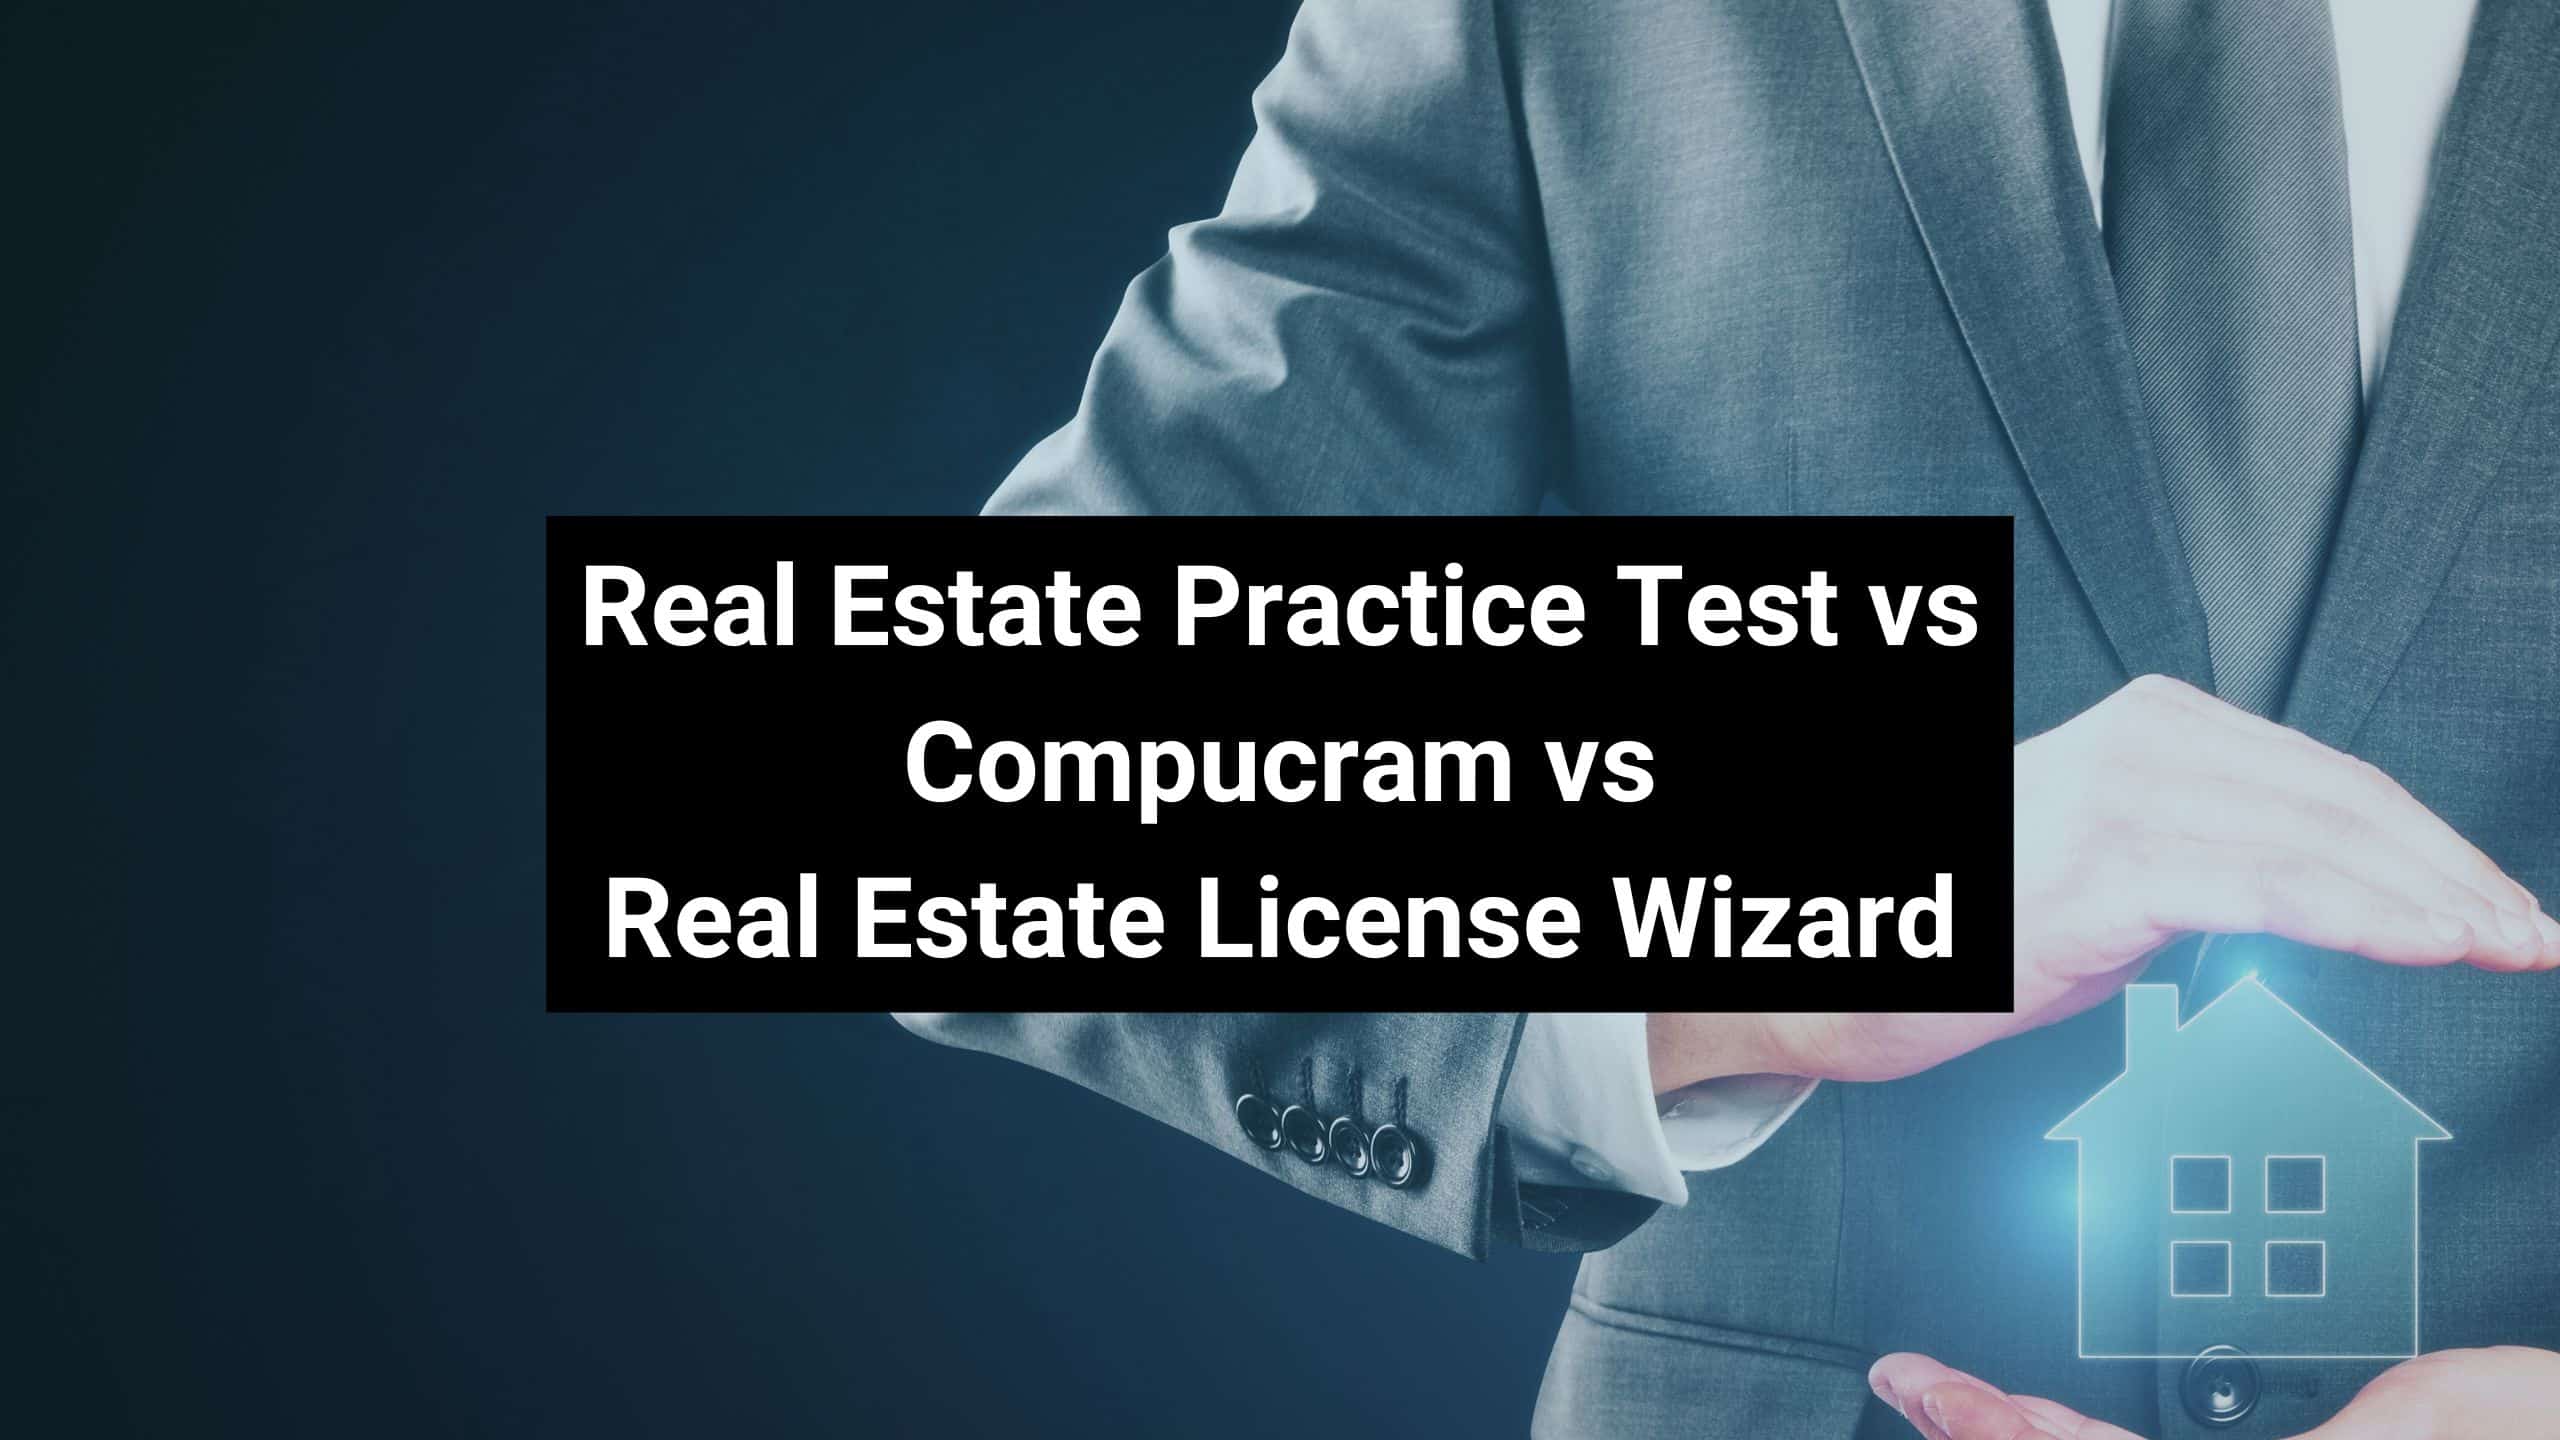 Real Estate Practice Test vs Compucram vs Real Estate License Wizard Image